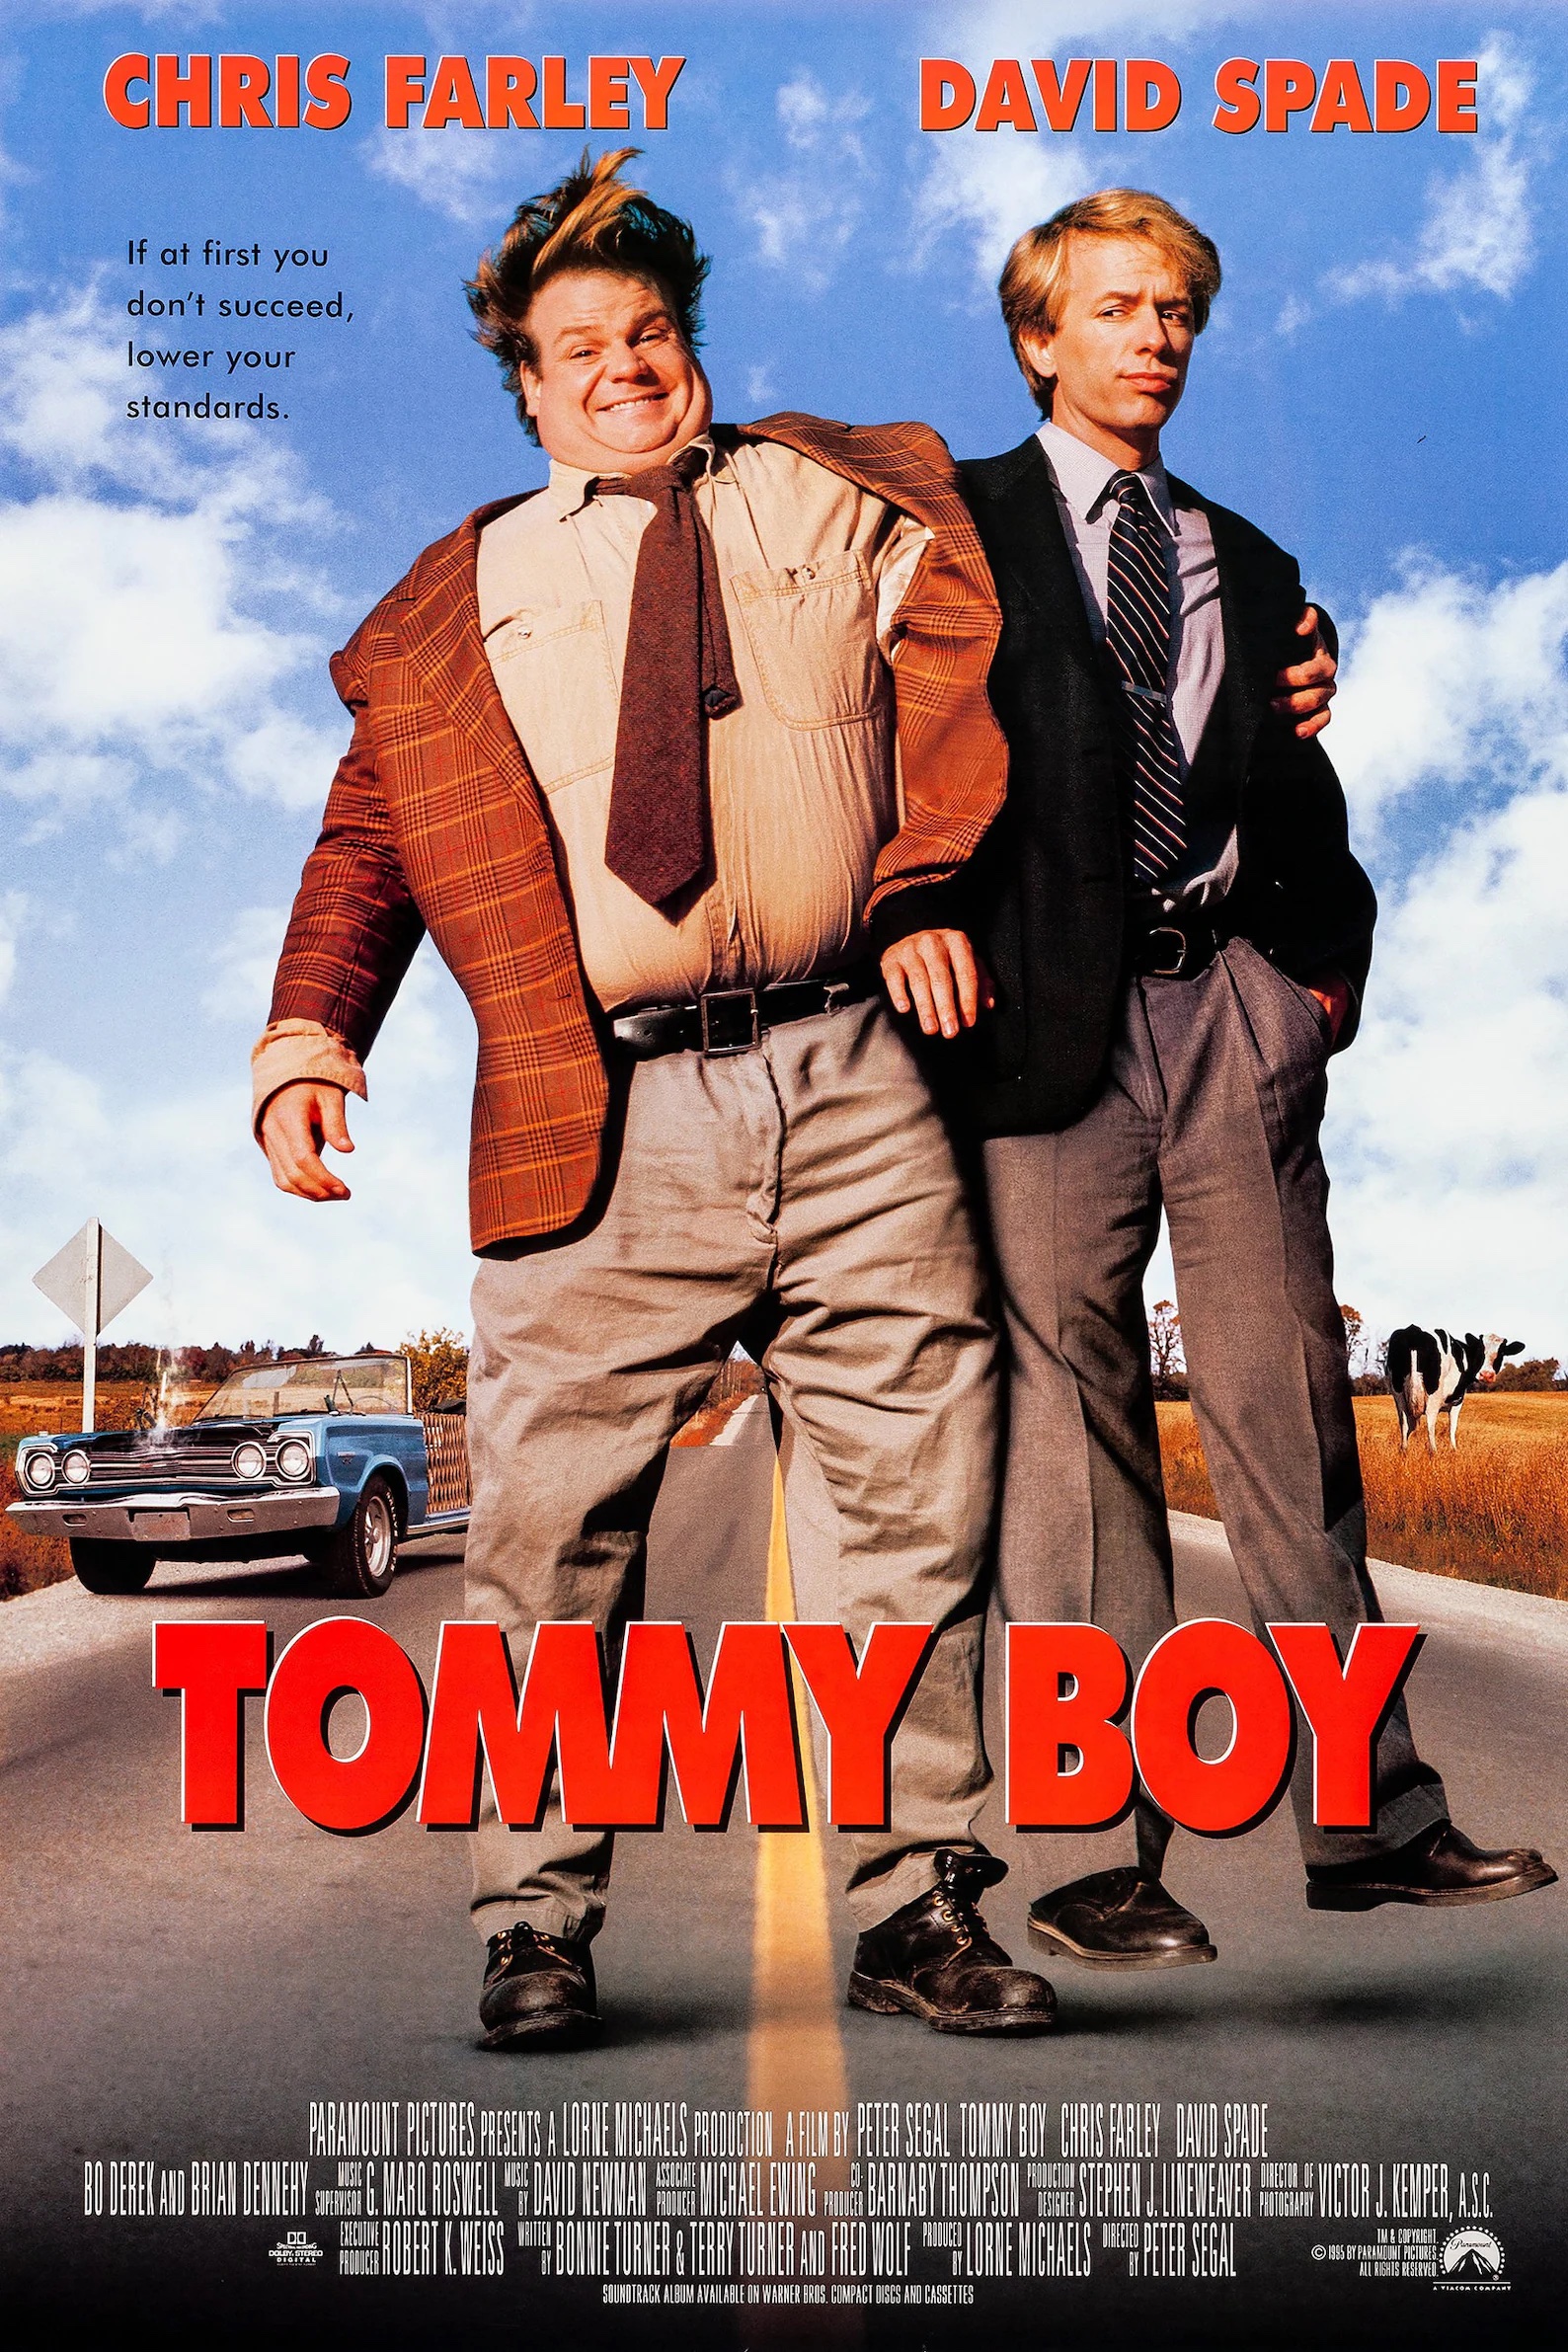 Favorite Road Trip Movies: Tommy boy